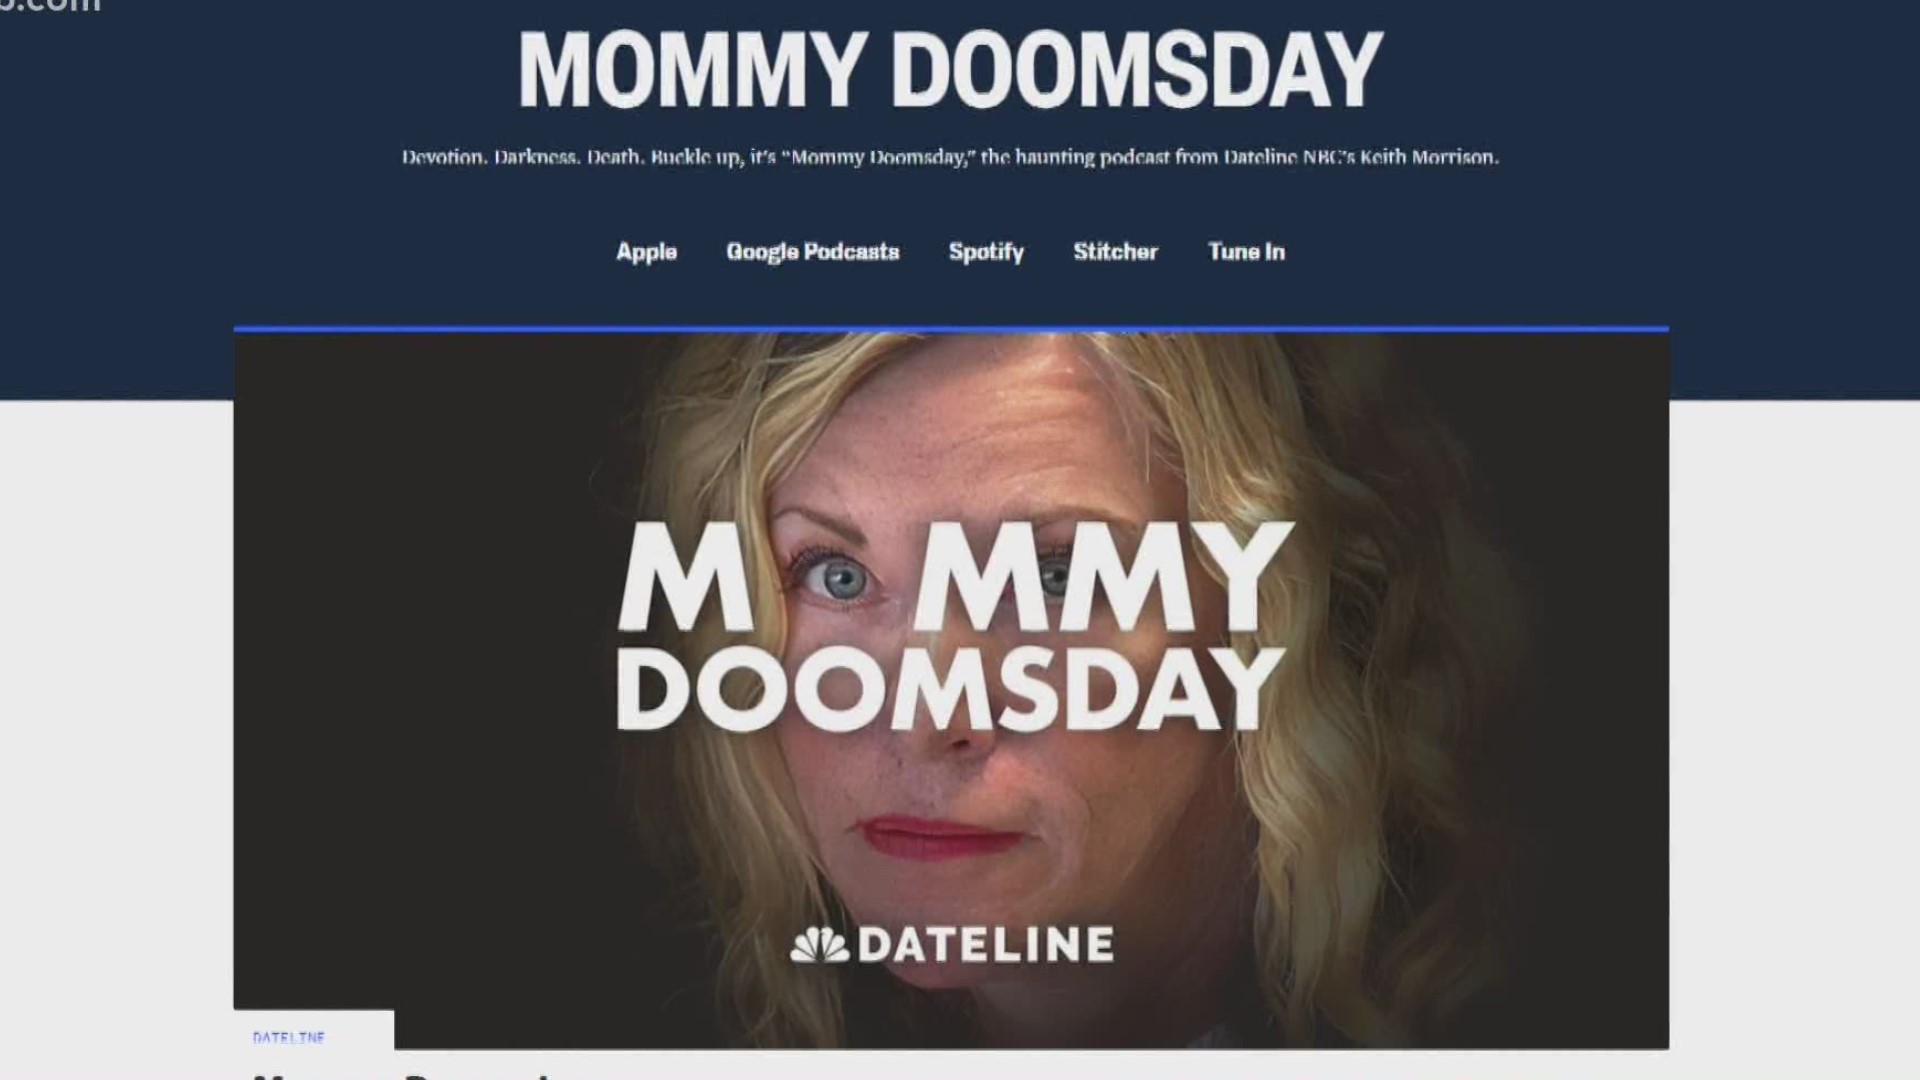 dateline mommy doomsday